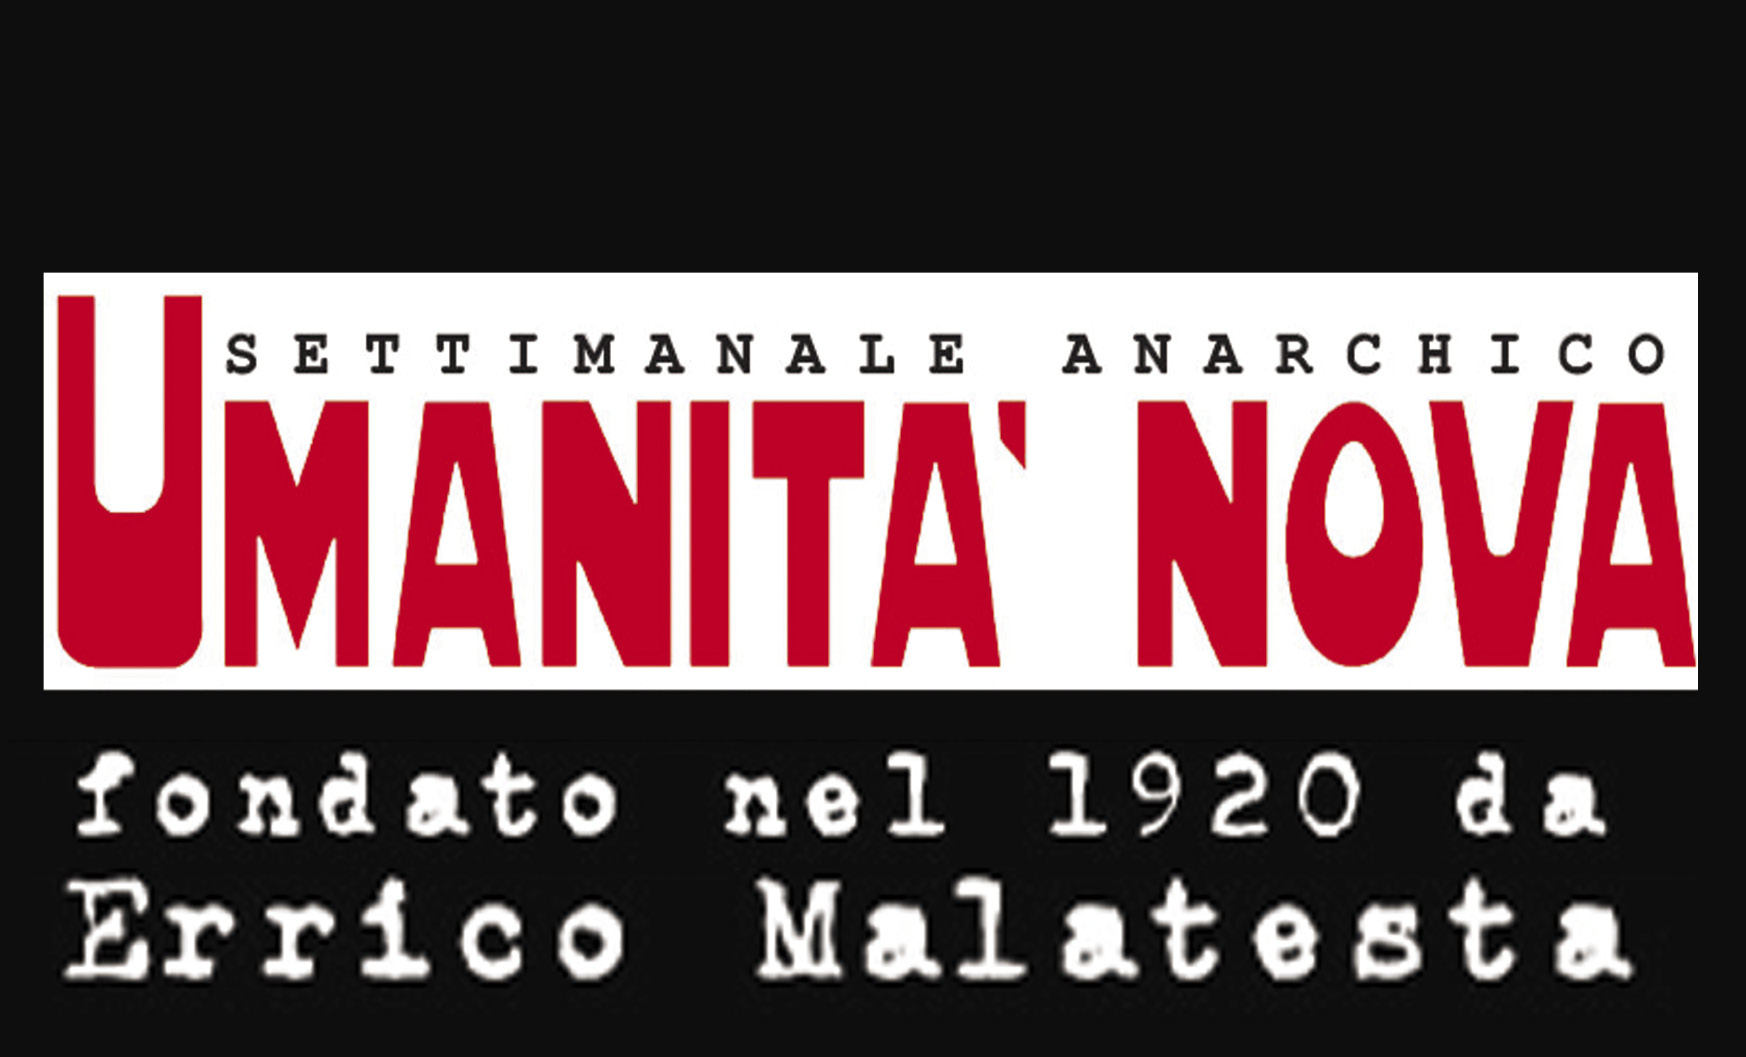 Errico Malatesta'nın Gazetesi: Umanita Nova